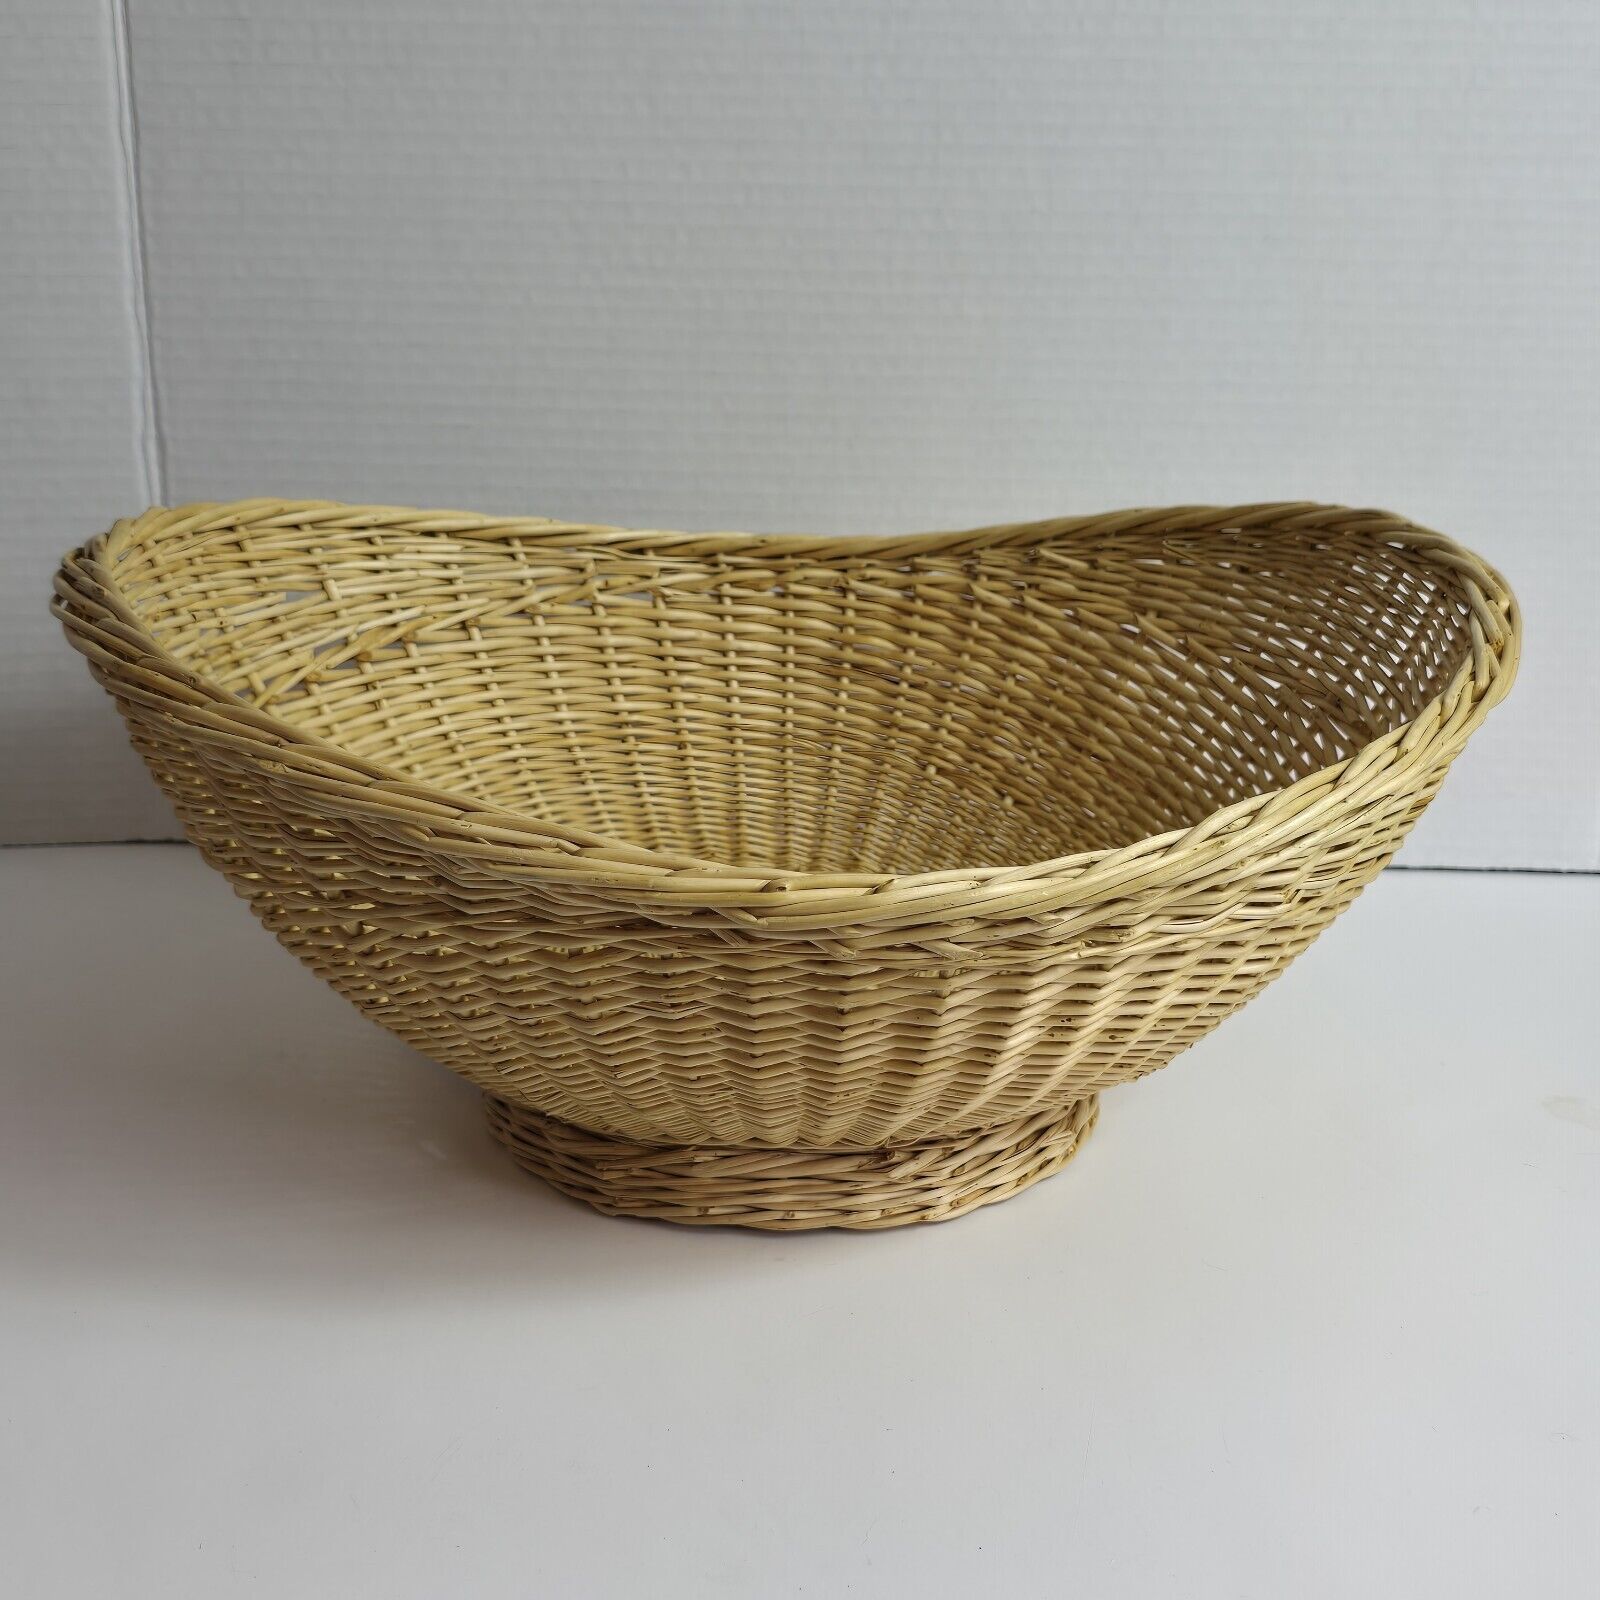 Large Oval Woven Wicker Fruit Bread Basket Pedestal Footed Farmhouse Cottagecore